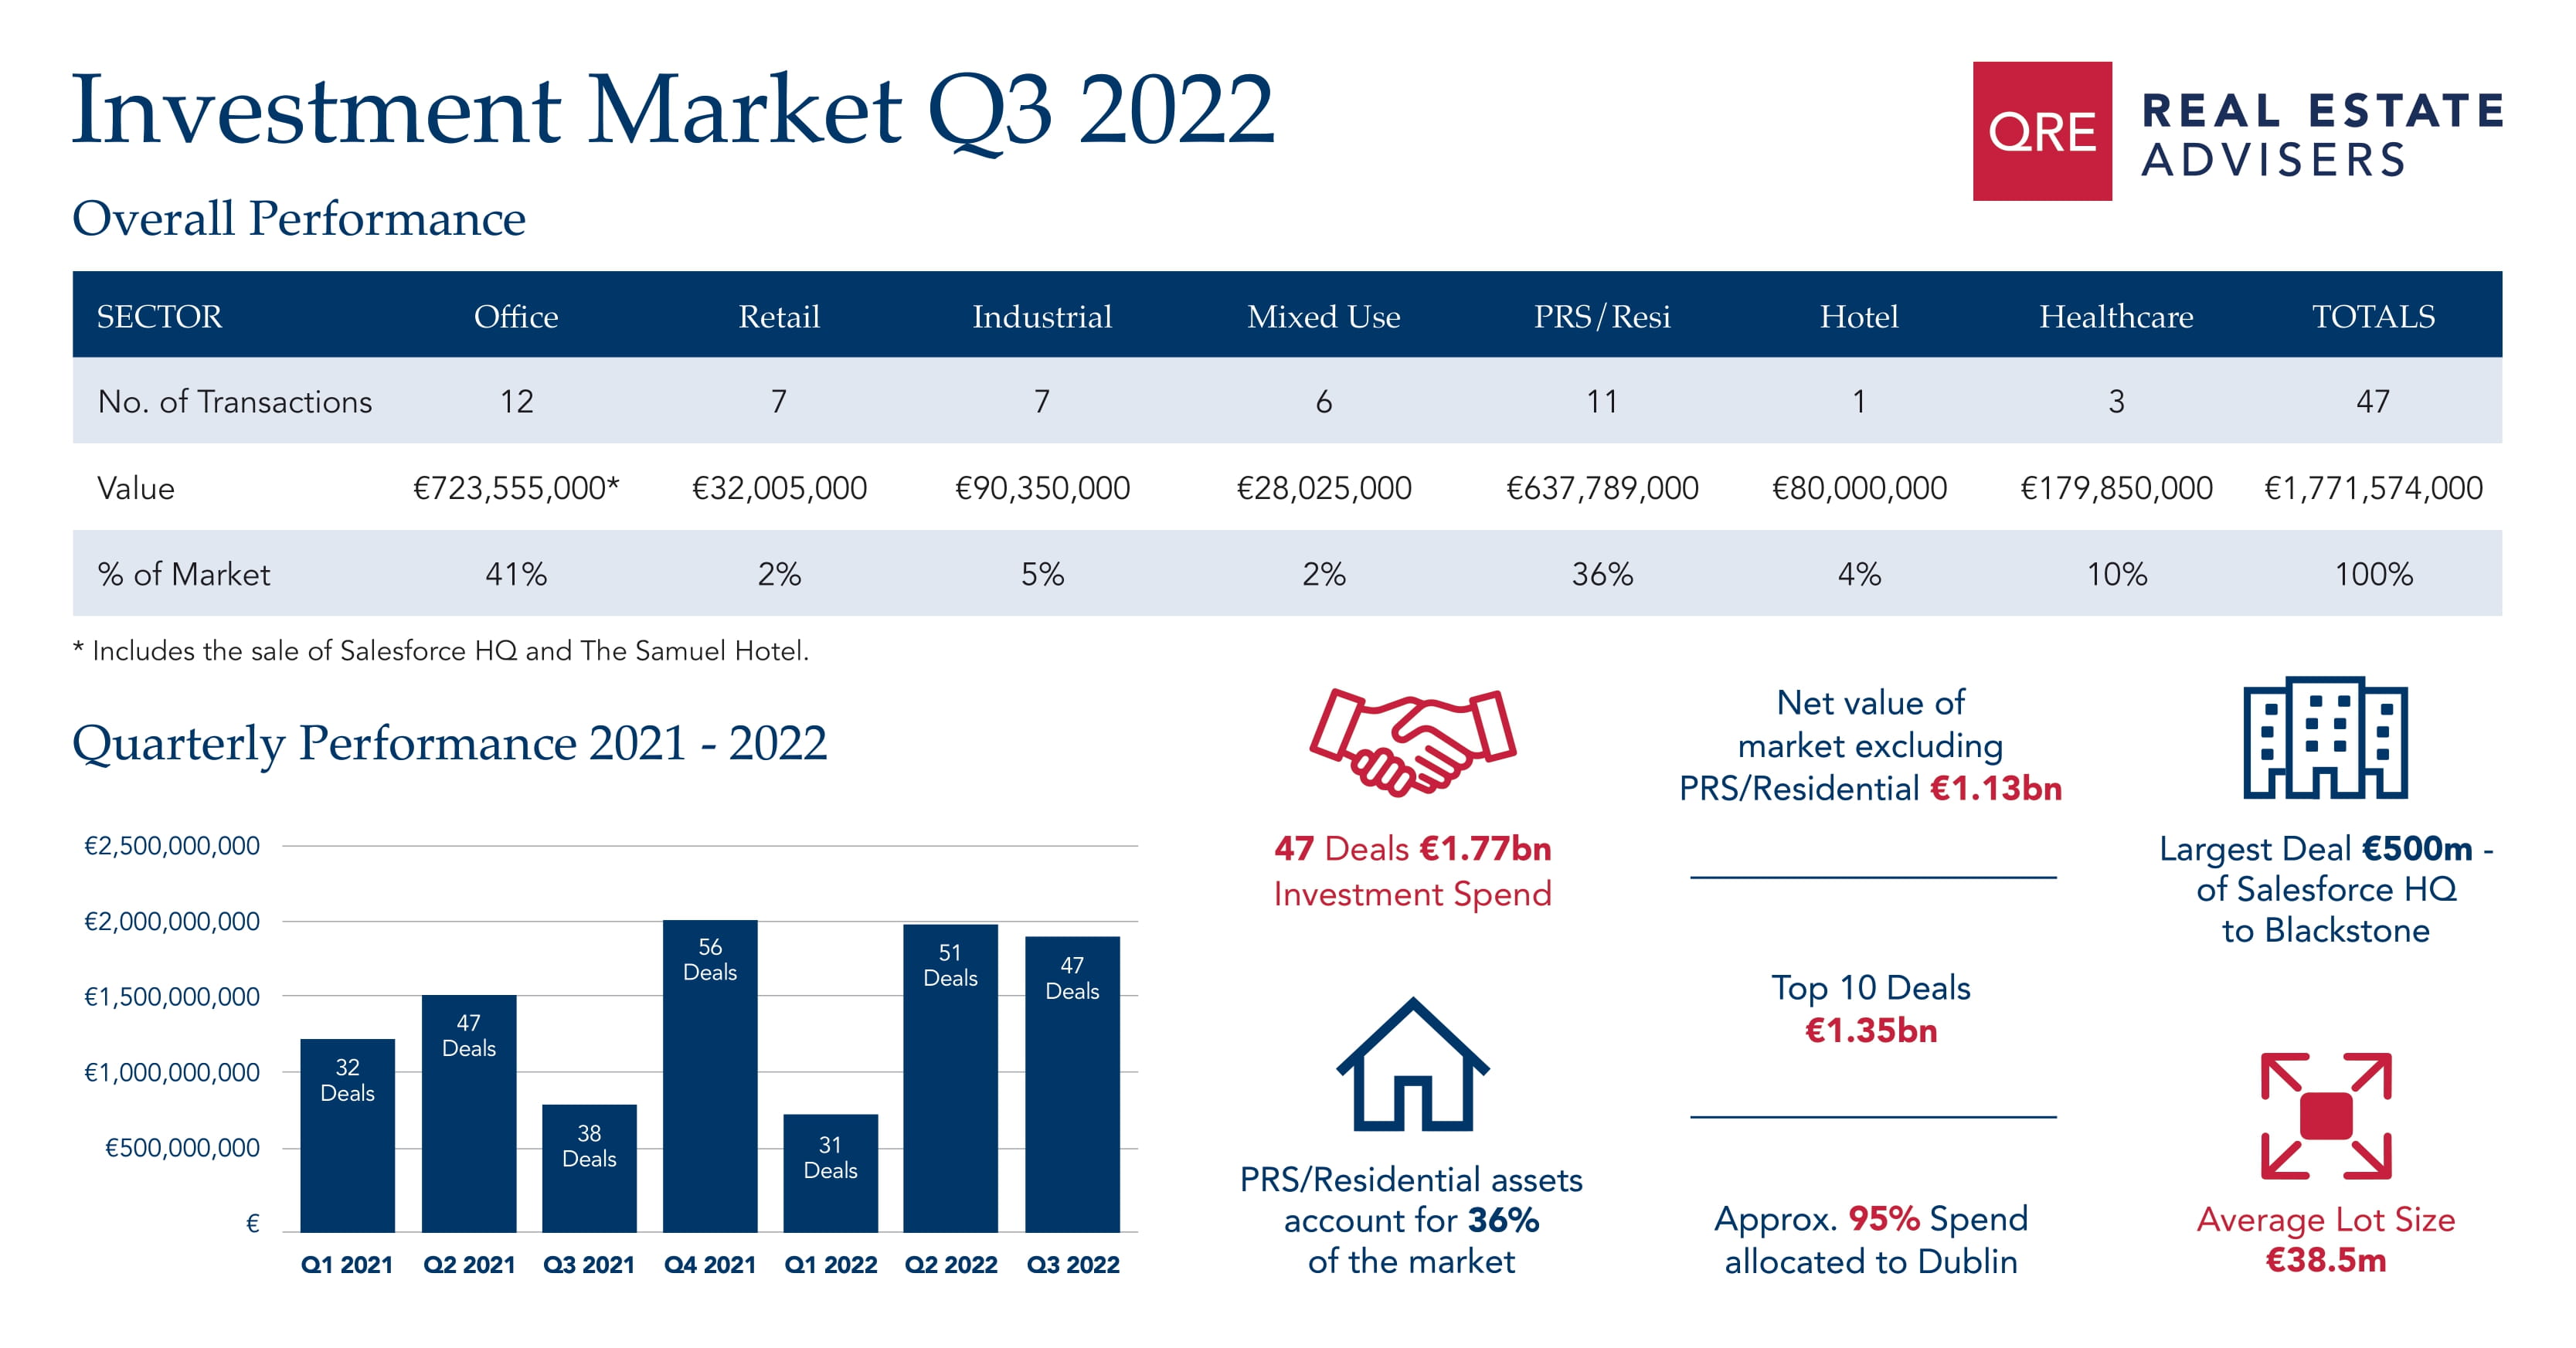 Q3 2022 Investment Market Analysis